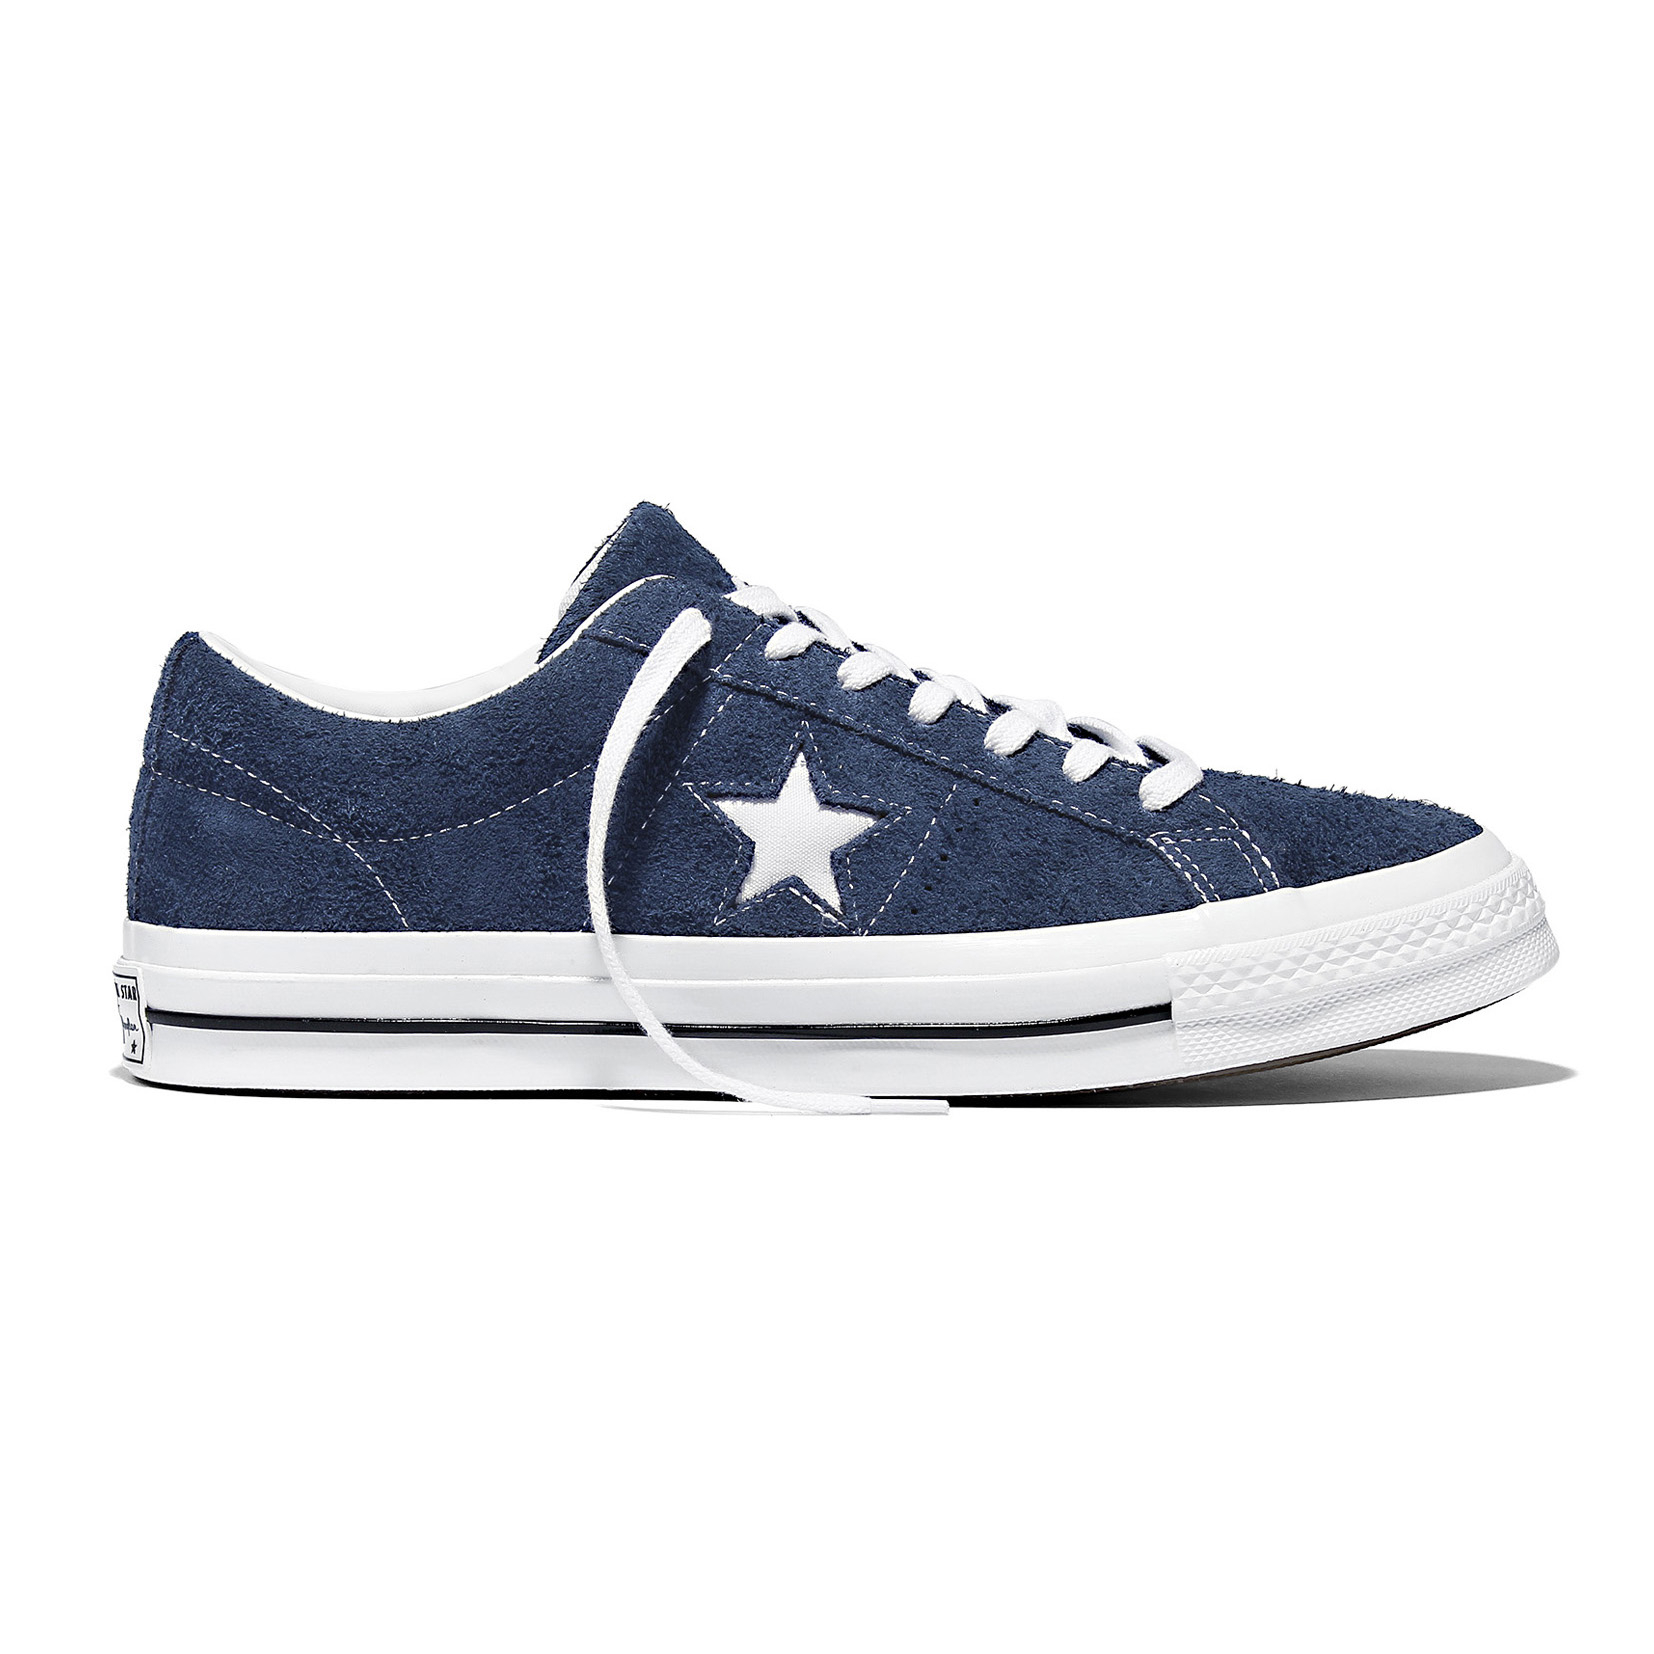 Converse One Star Navy Suede Sneaker Shoes | MySoftlogic.lk